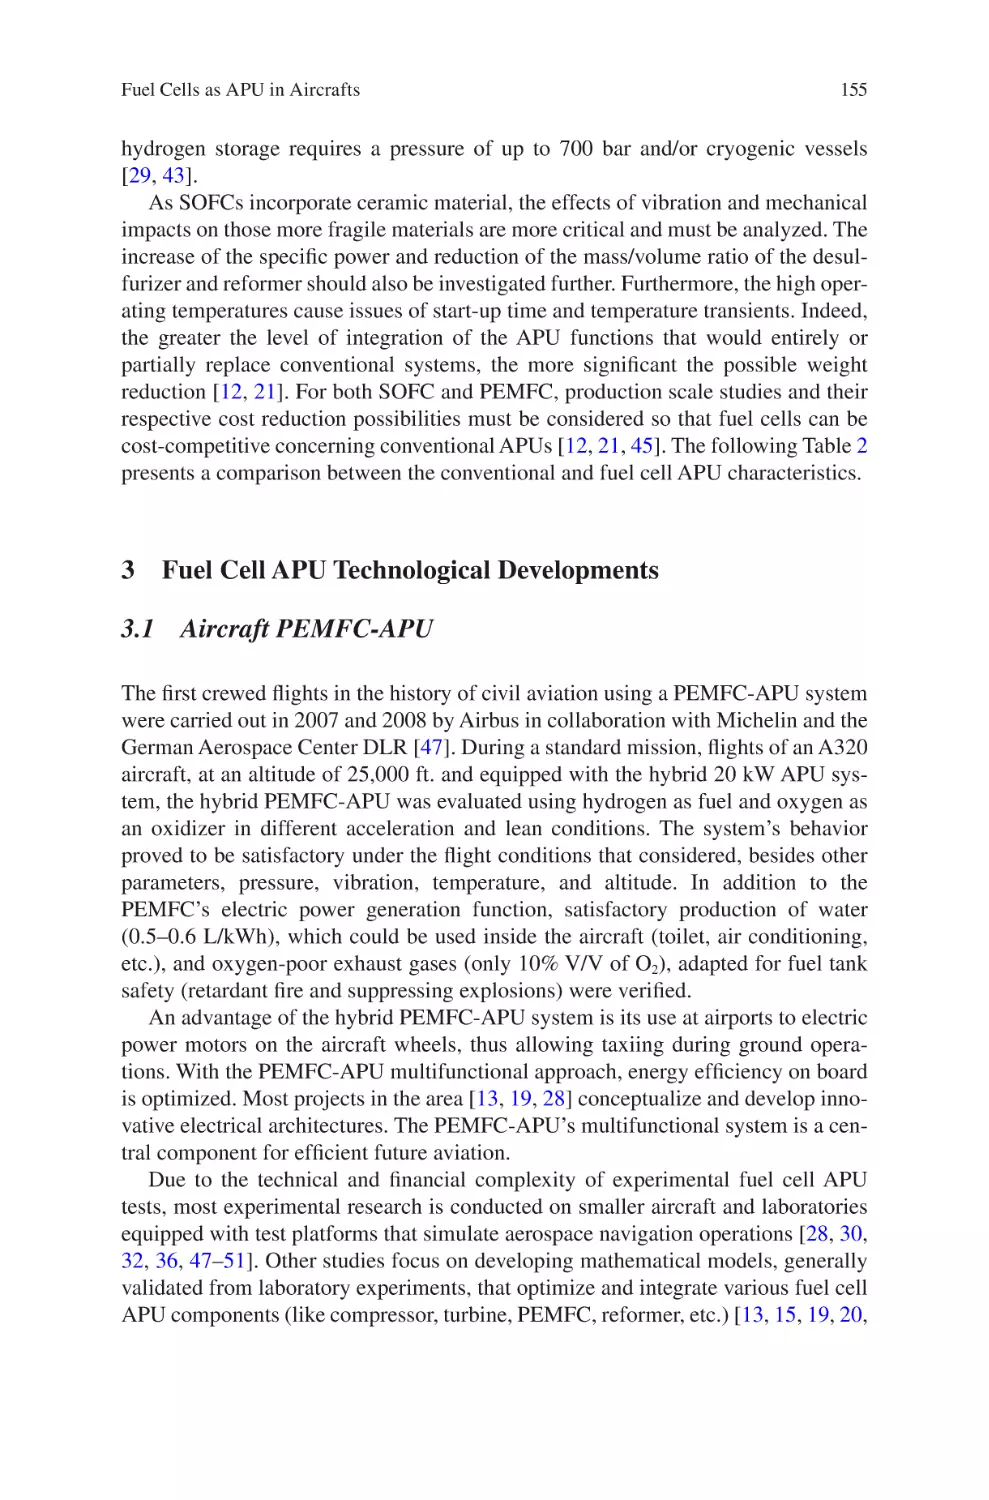 3 Fuel Cell APU Technological Developments
3.1 Aircraft PEMFC-APU